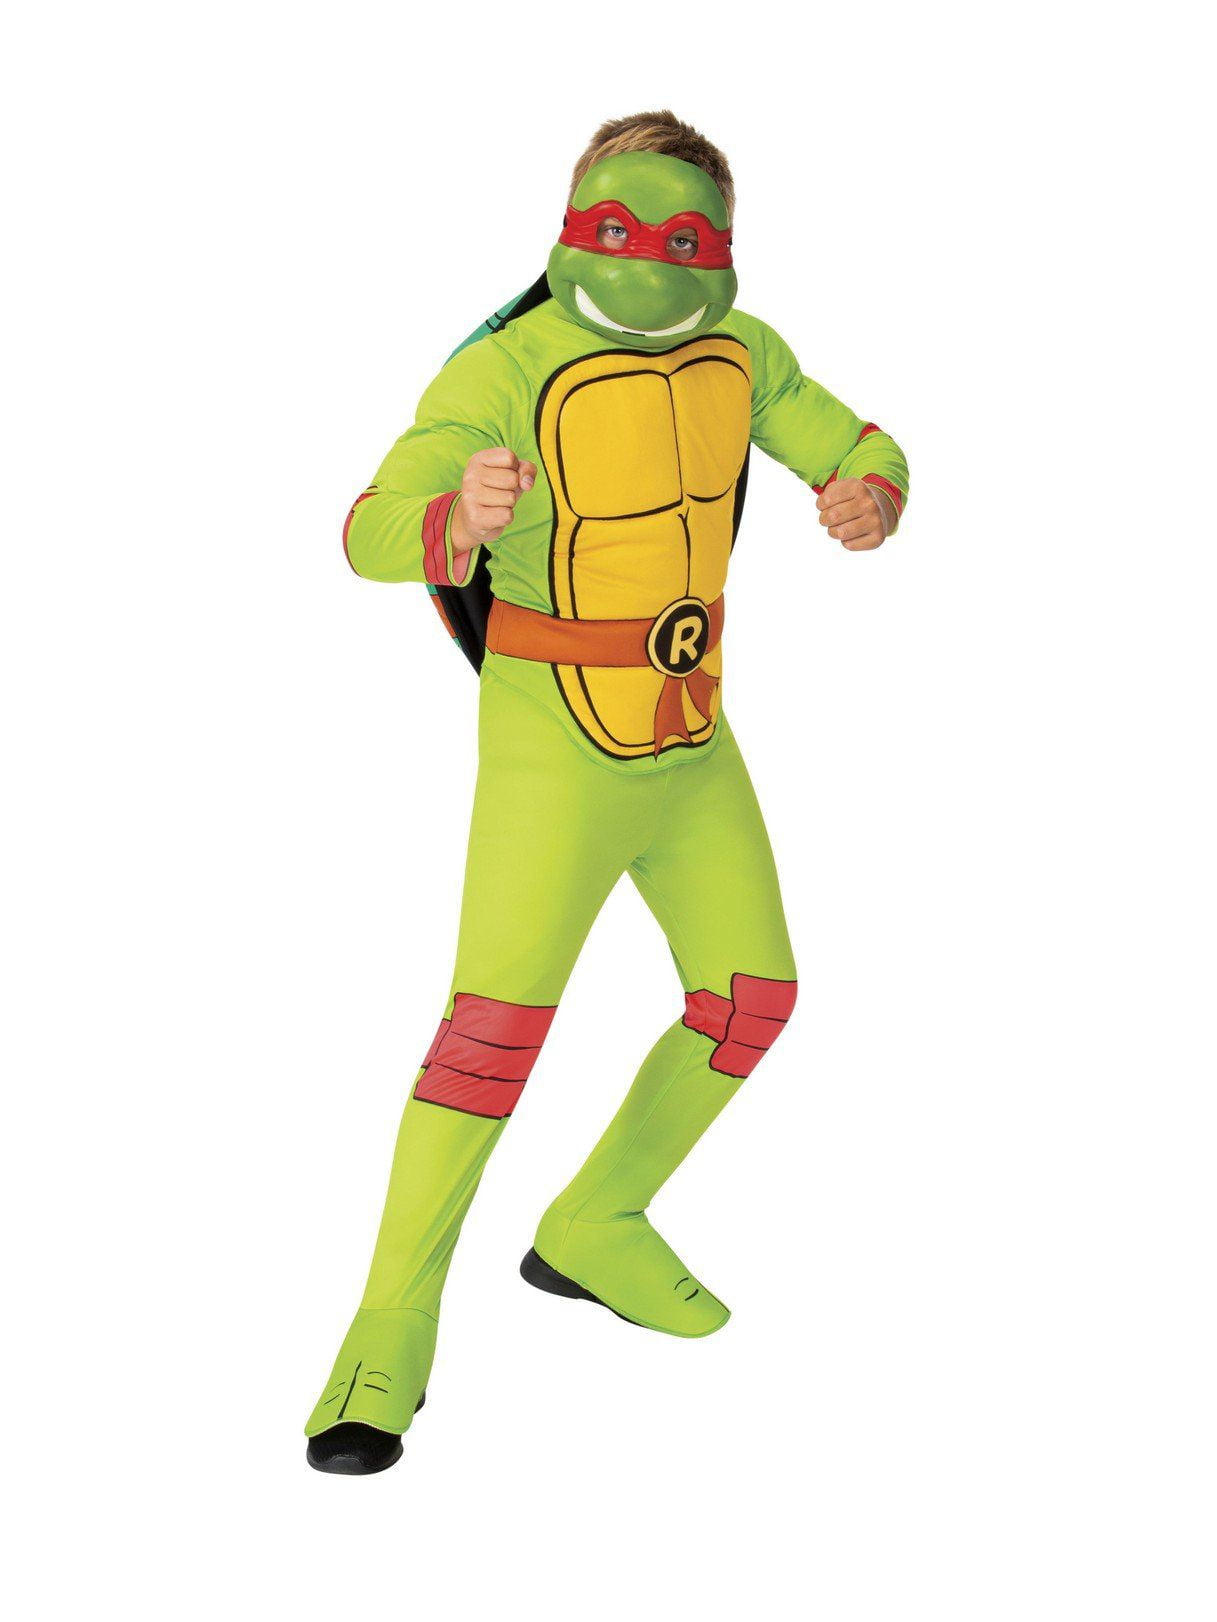 Details about   NWT Boys Teenage Mutant Ninja Turtles Raphael Disguise Halloween Costume Size M 